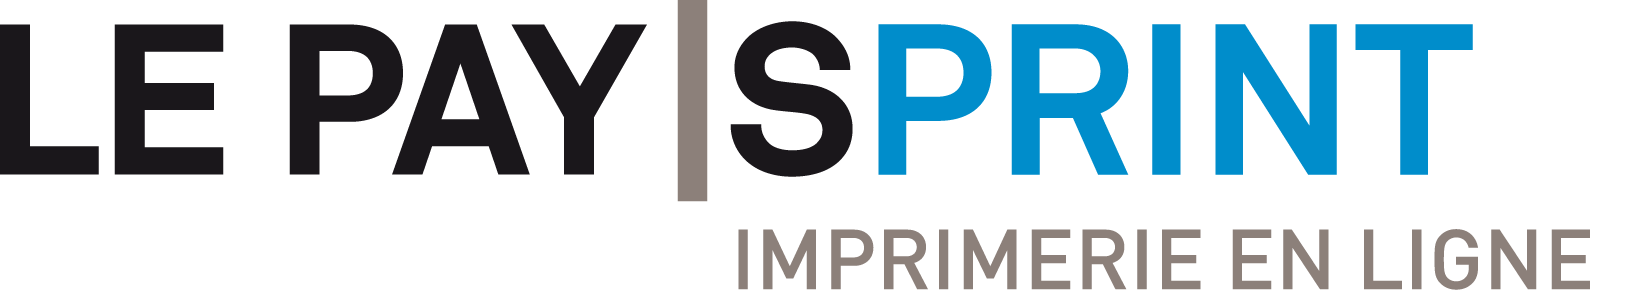 Paysprint Logo